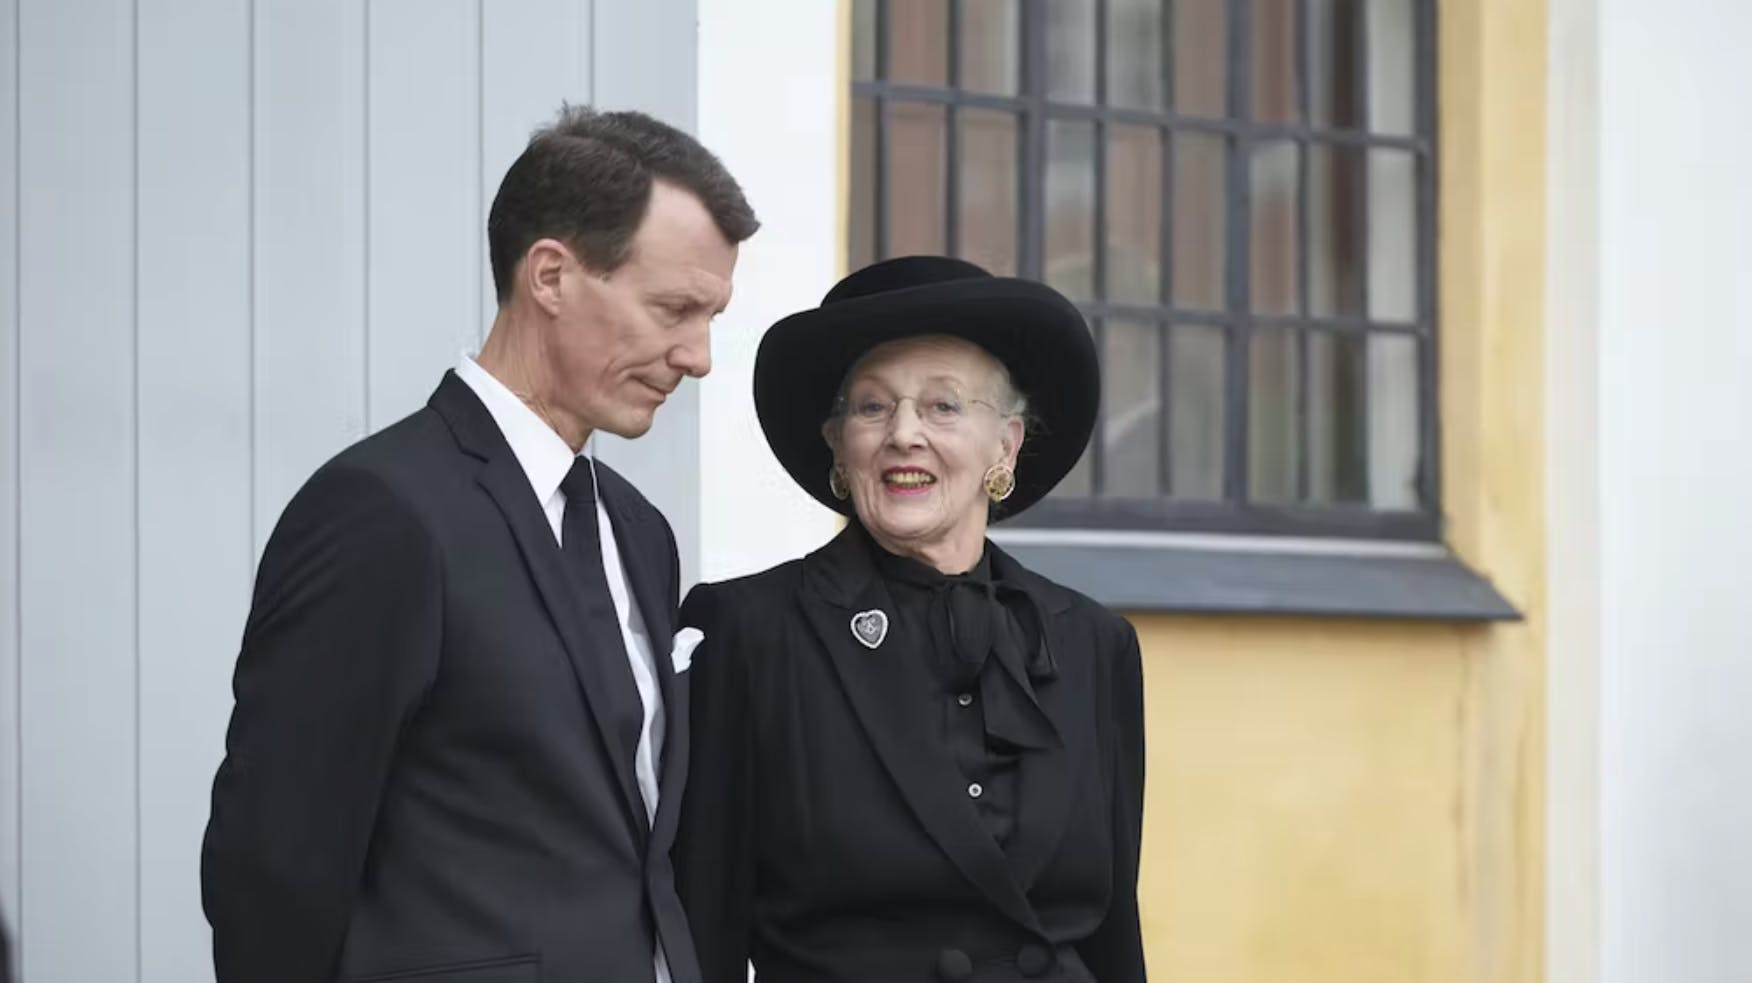 Prins Joachim og dronning Margrethe har nu talt sammen. nbsp;